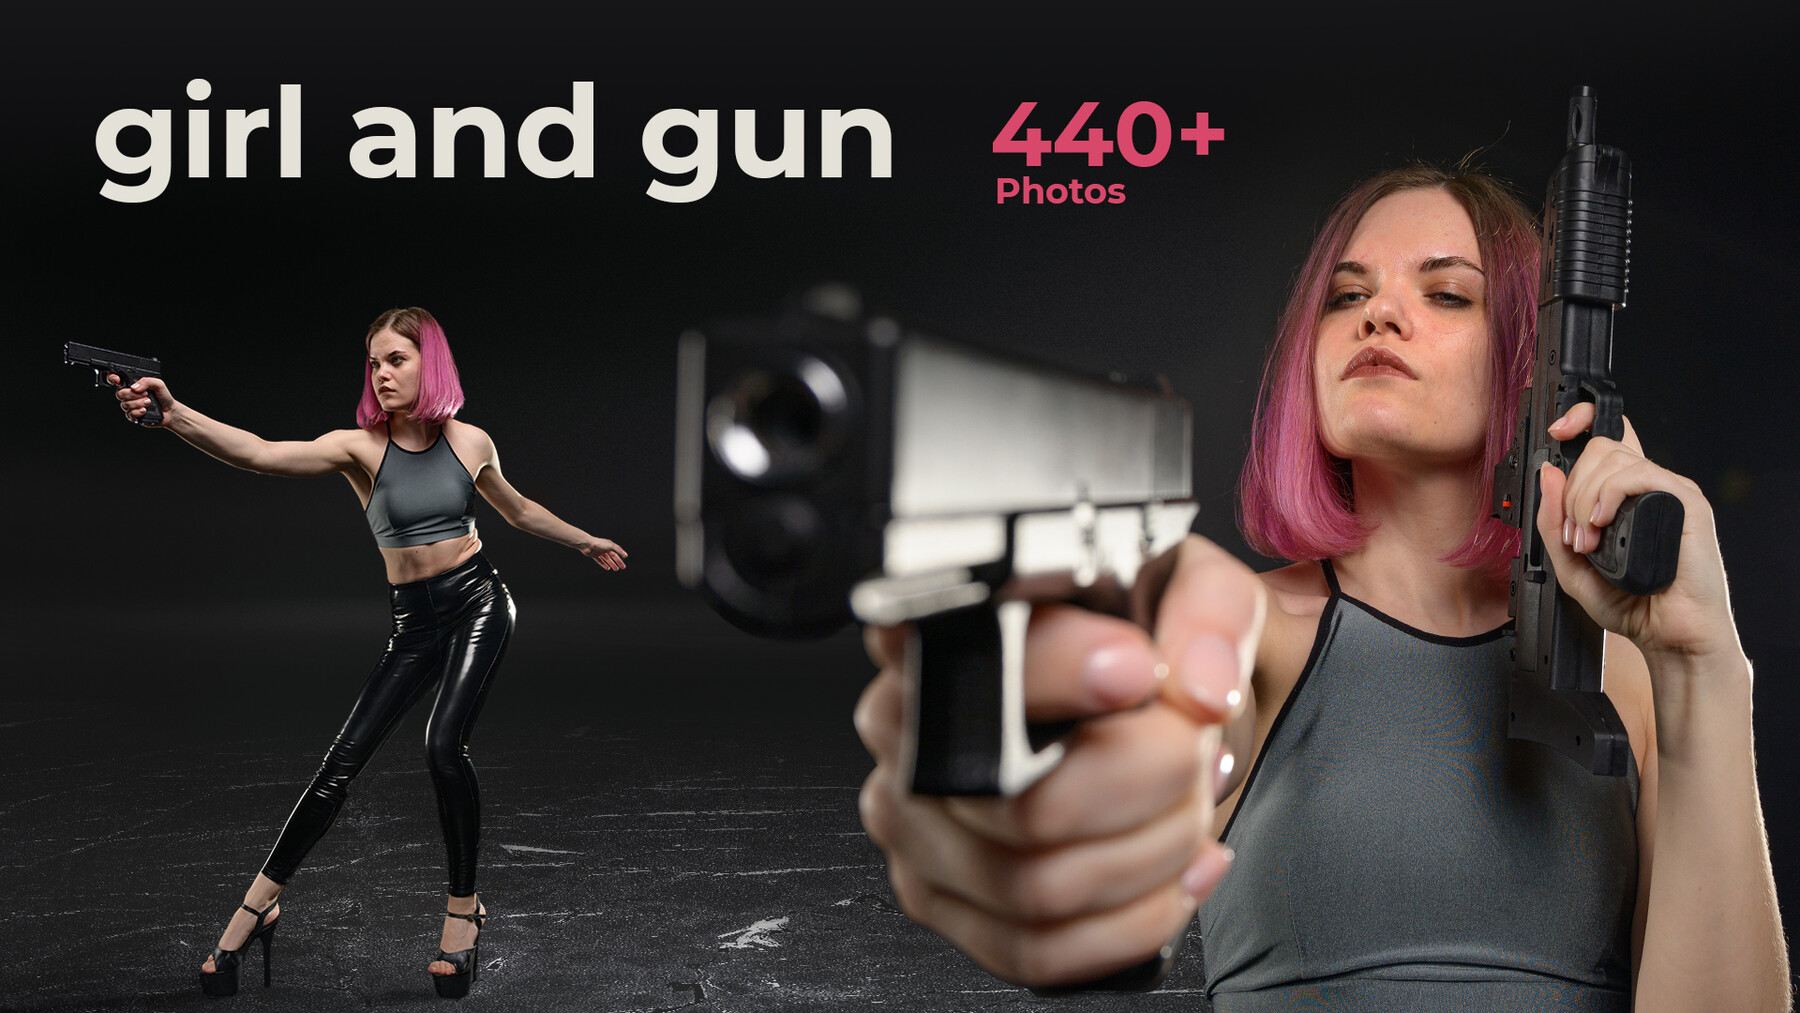 303 Girl Crouched Gun Images, Stock Photos & Vectors | Shutterstock